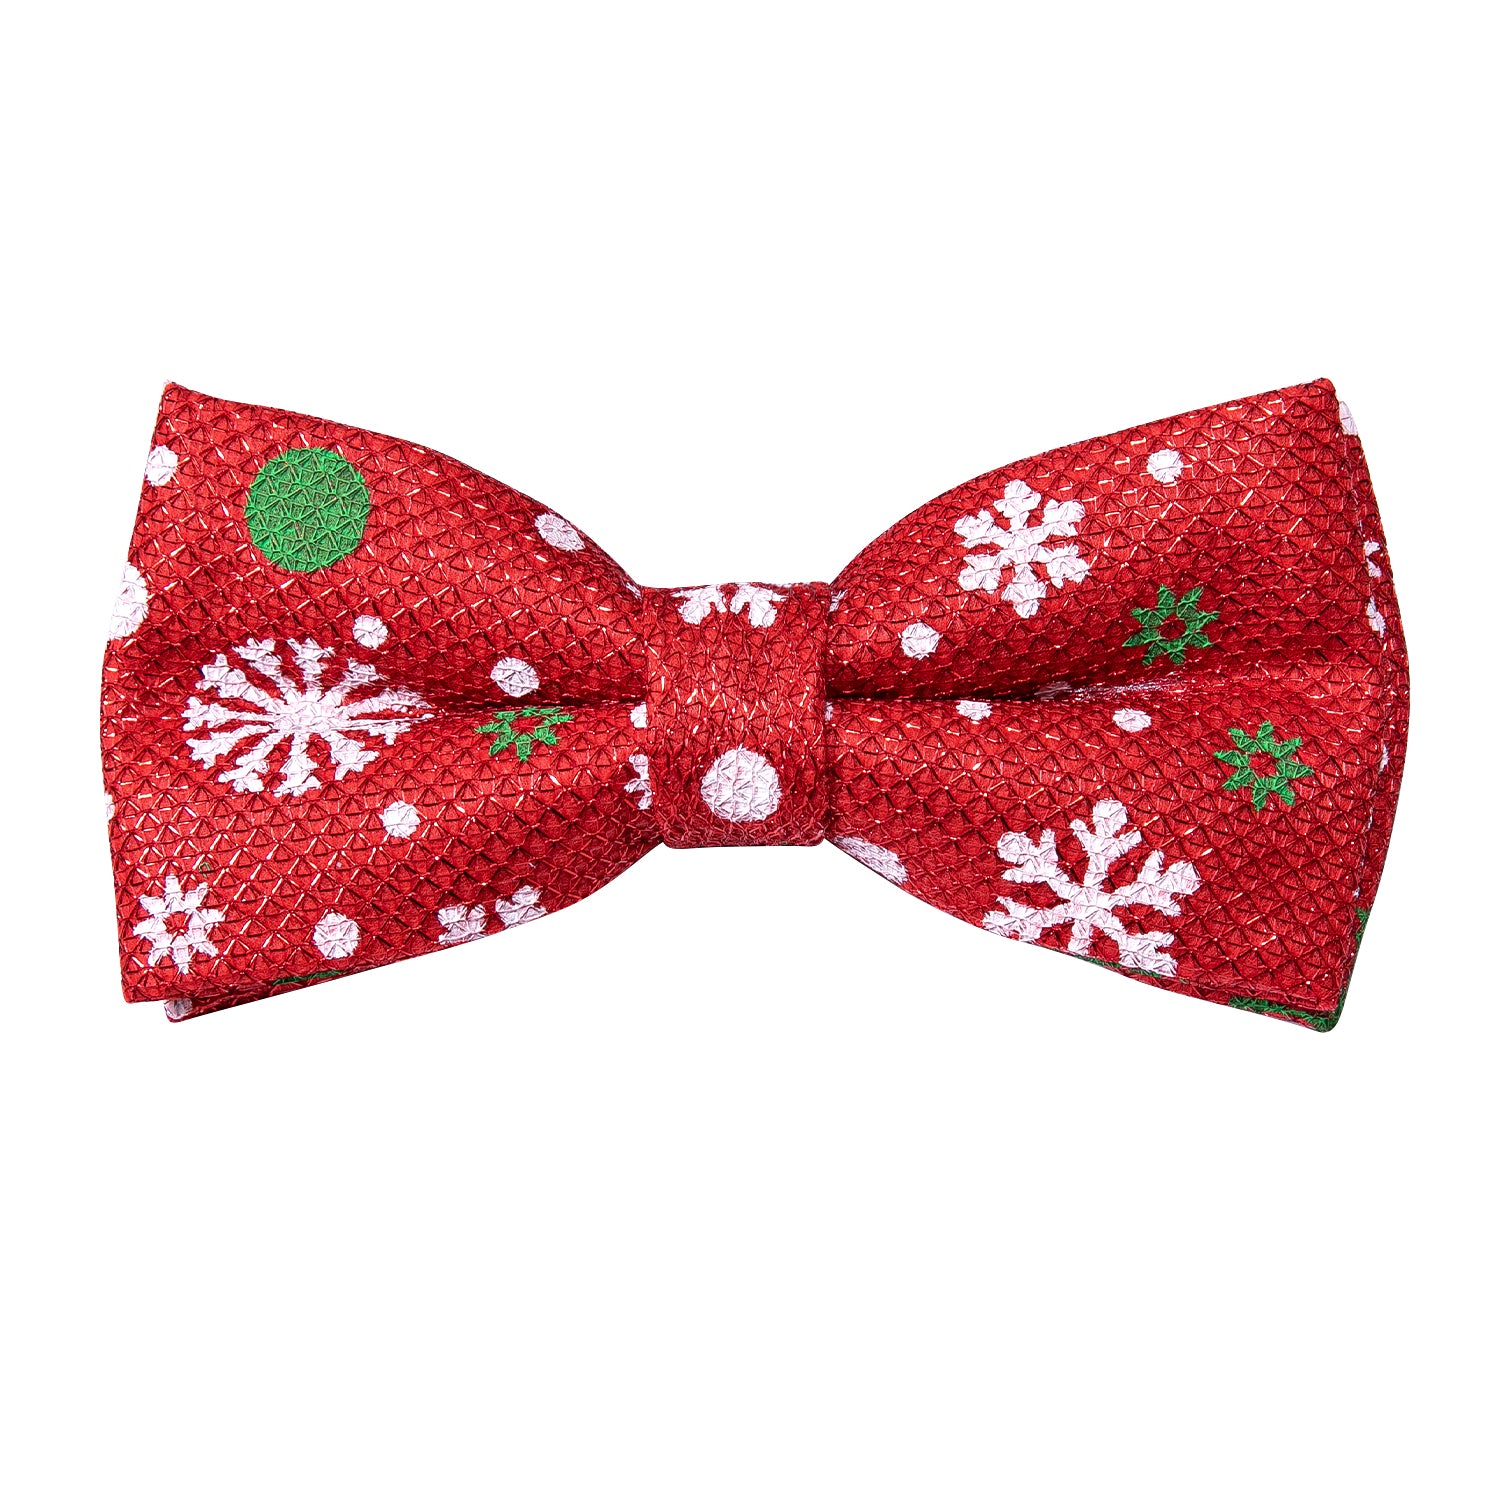 Christmas Men's Novelty Red White Snowflake Silk Vest Red Bowtie Set